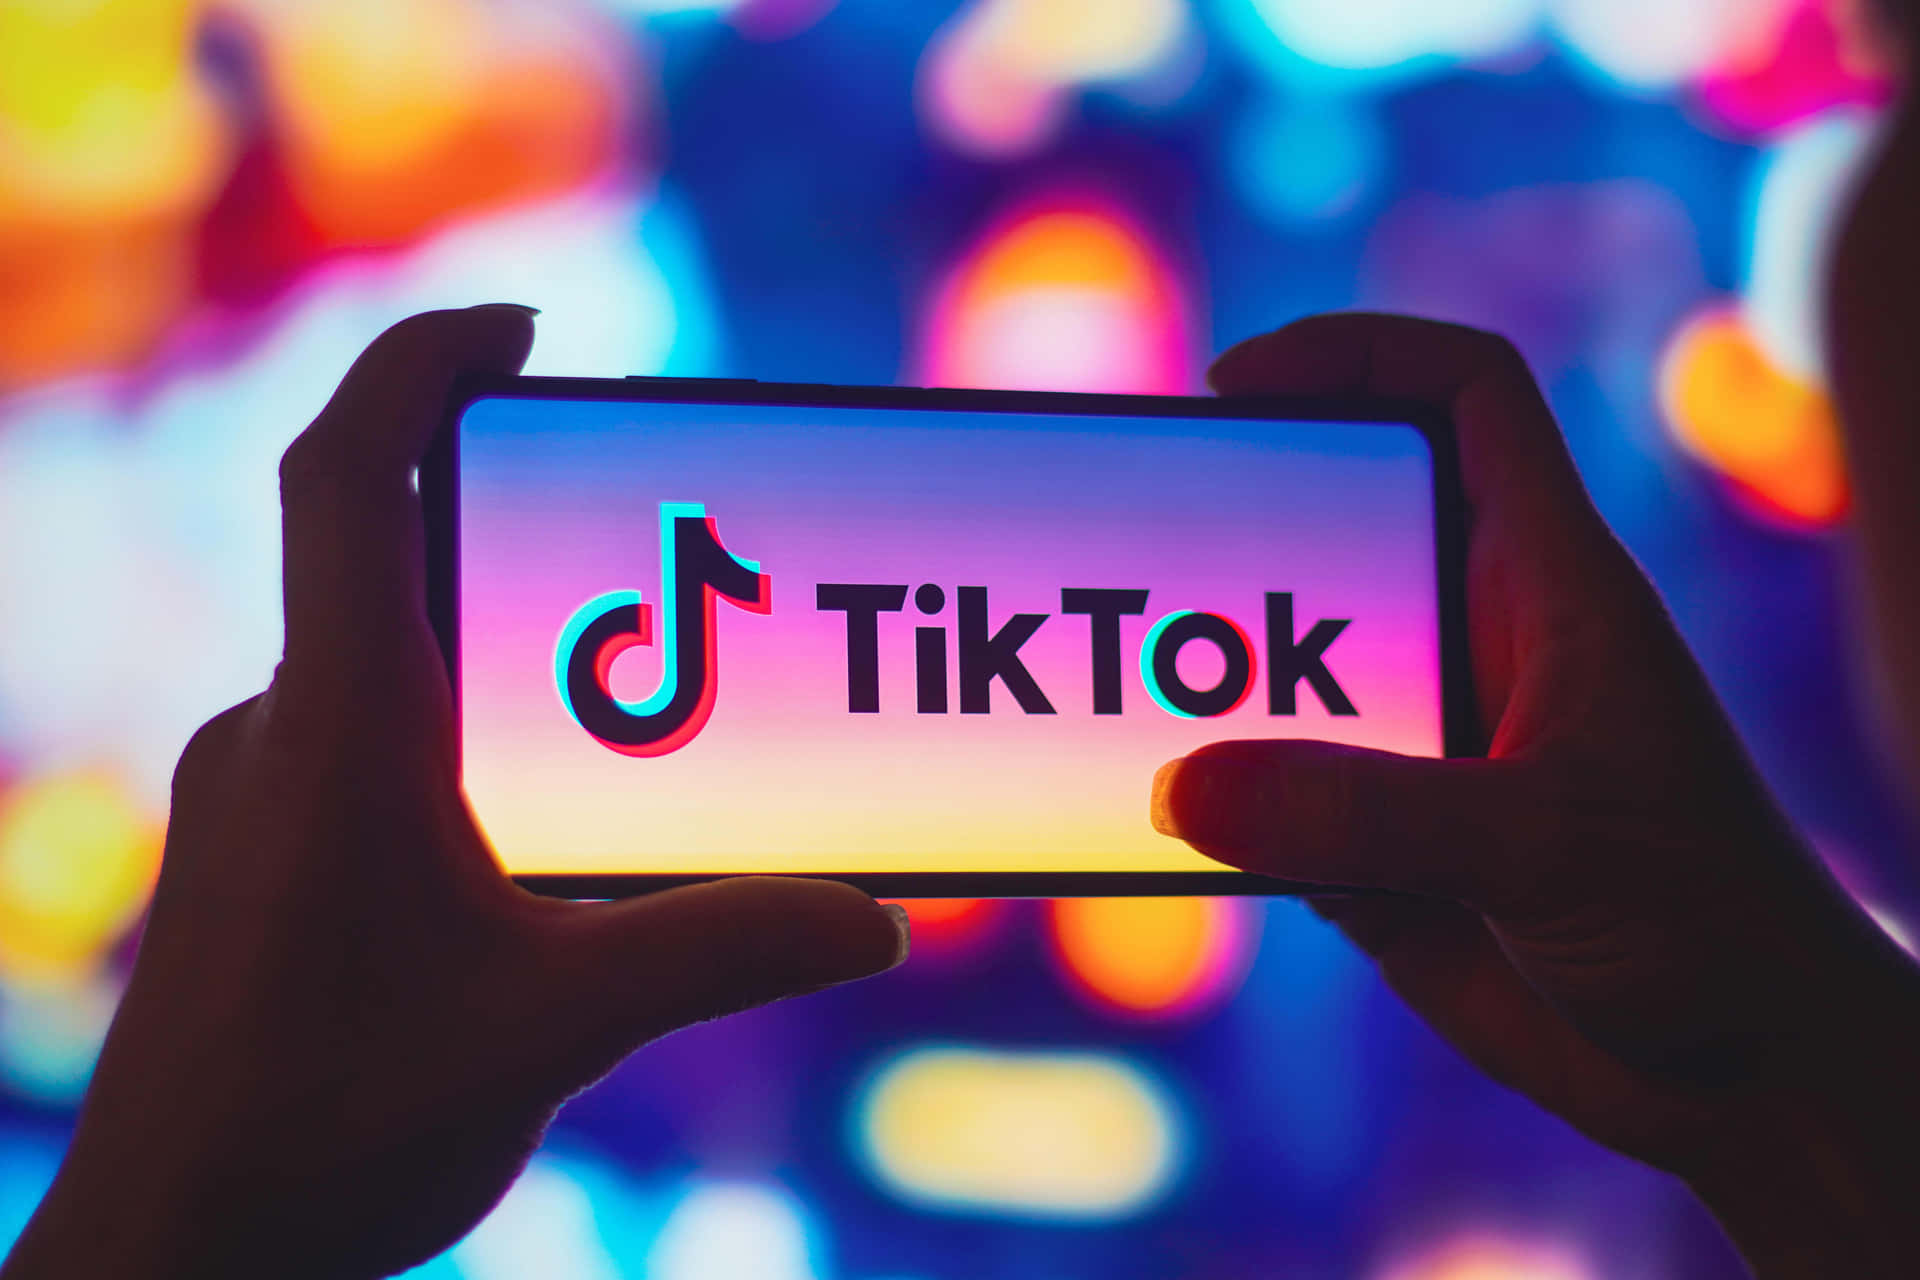 Express Yourself With TikTok